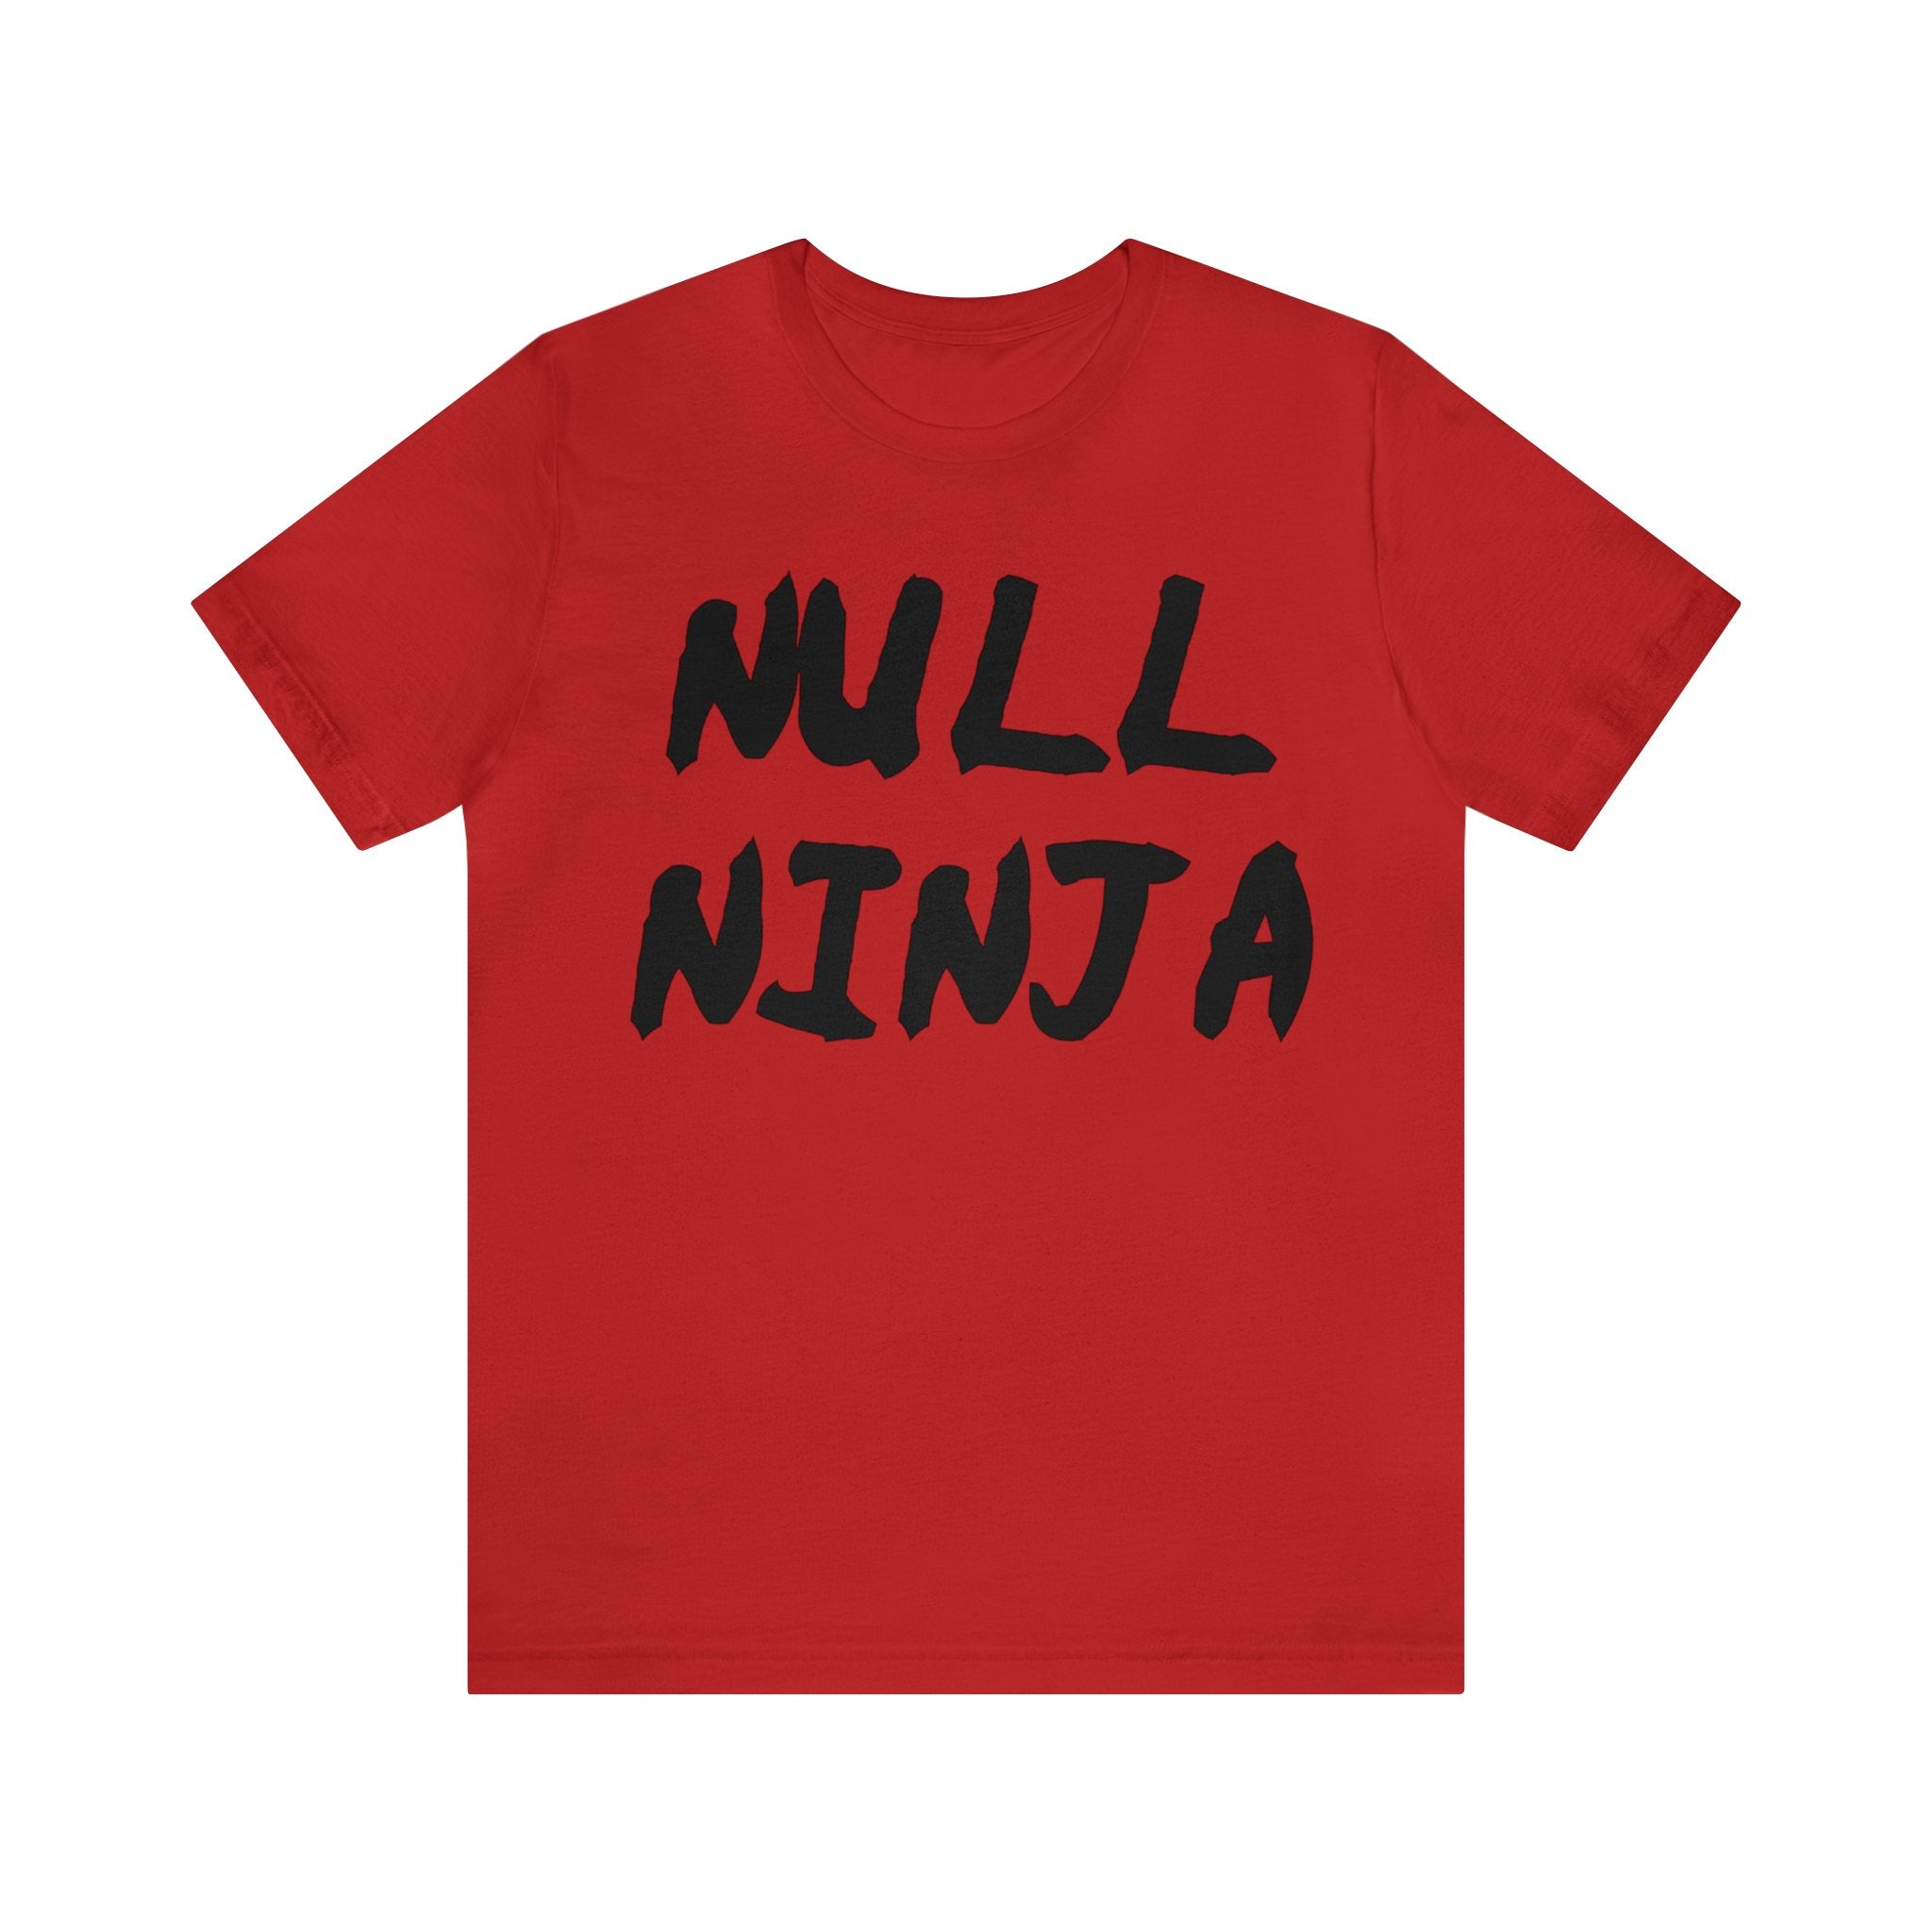 Null Ninja Tee Shirt